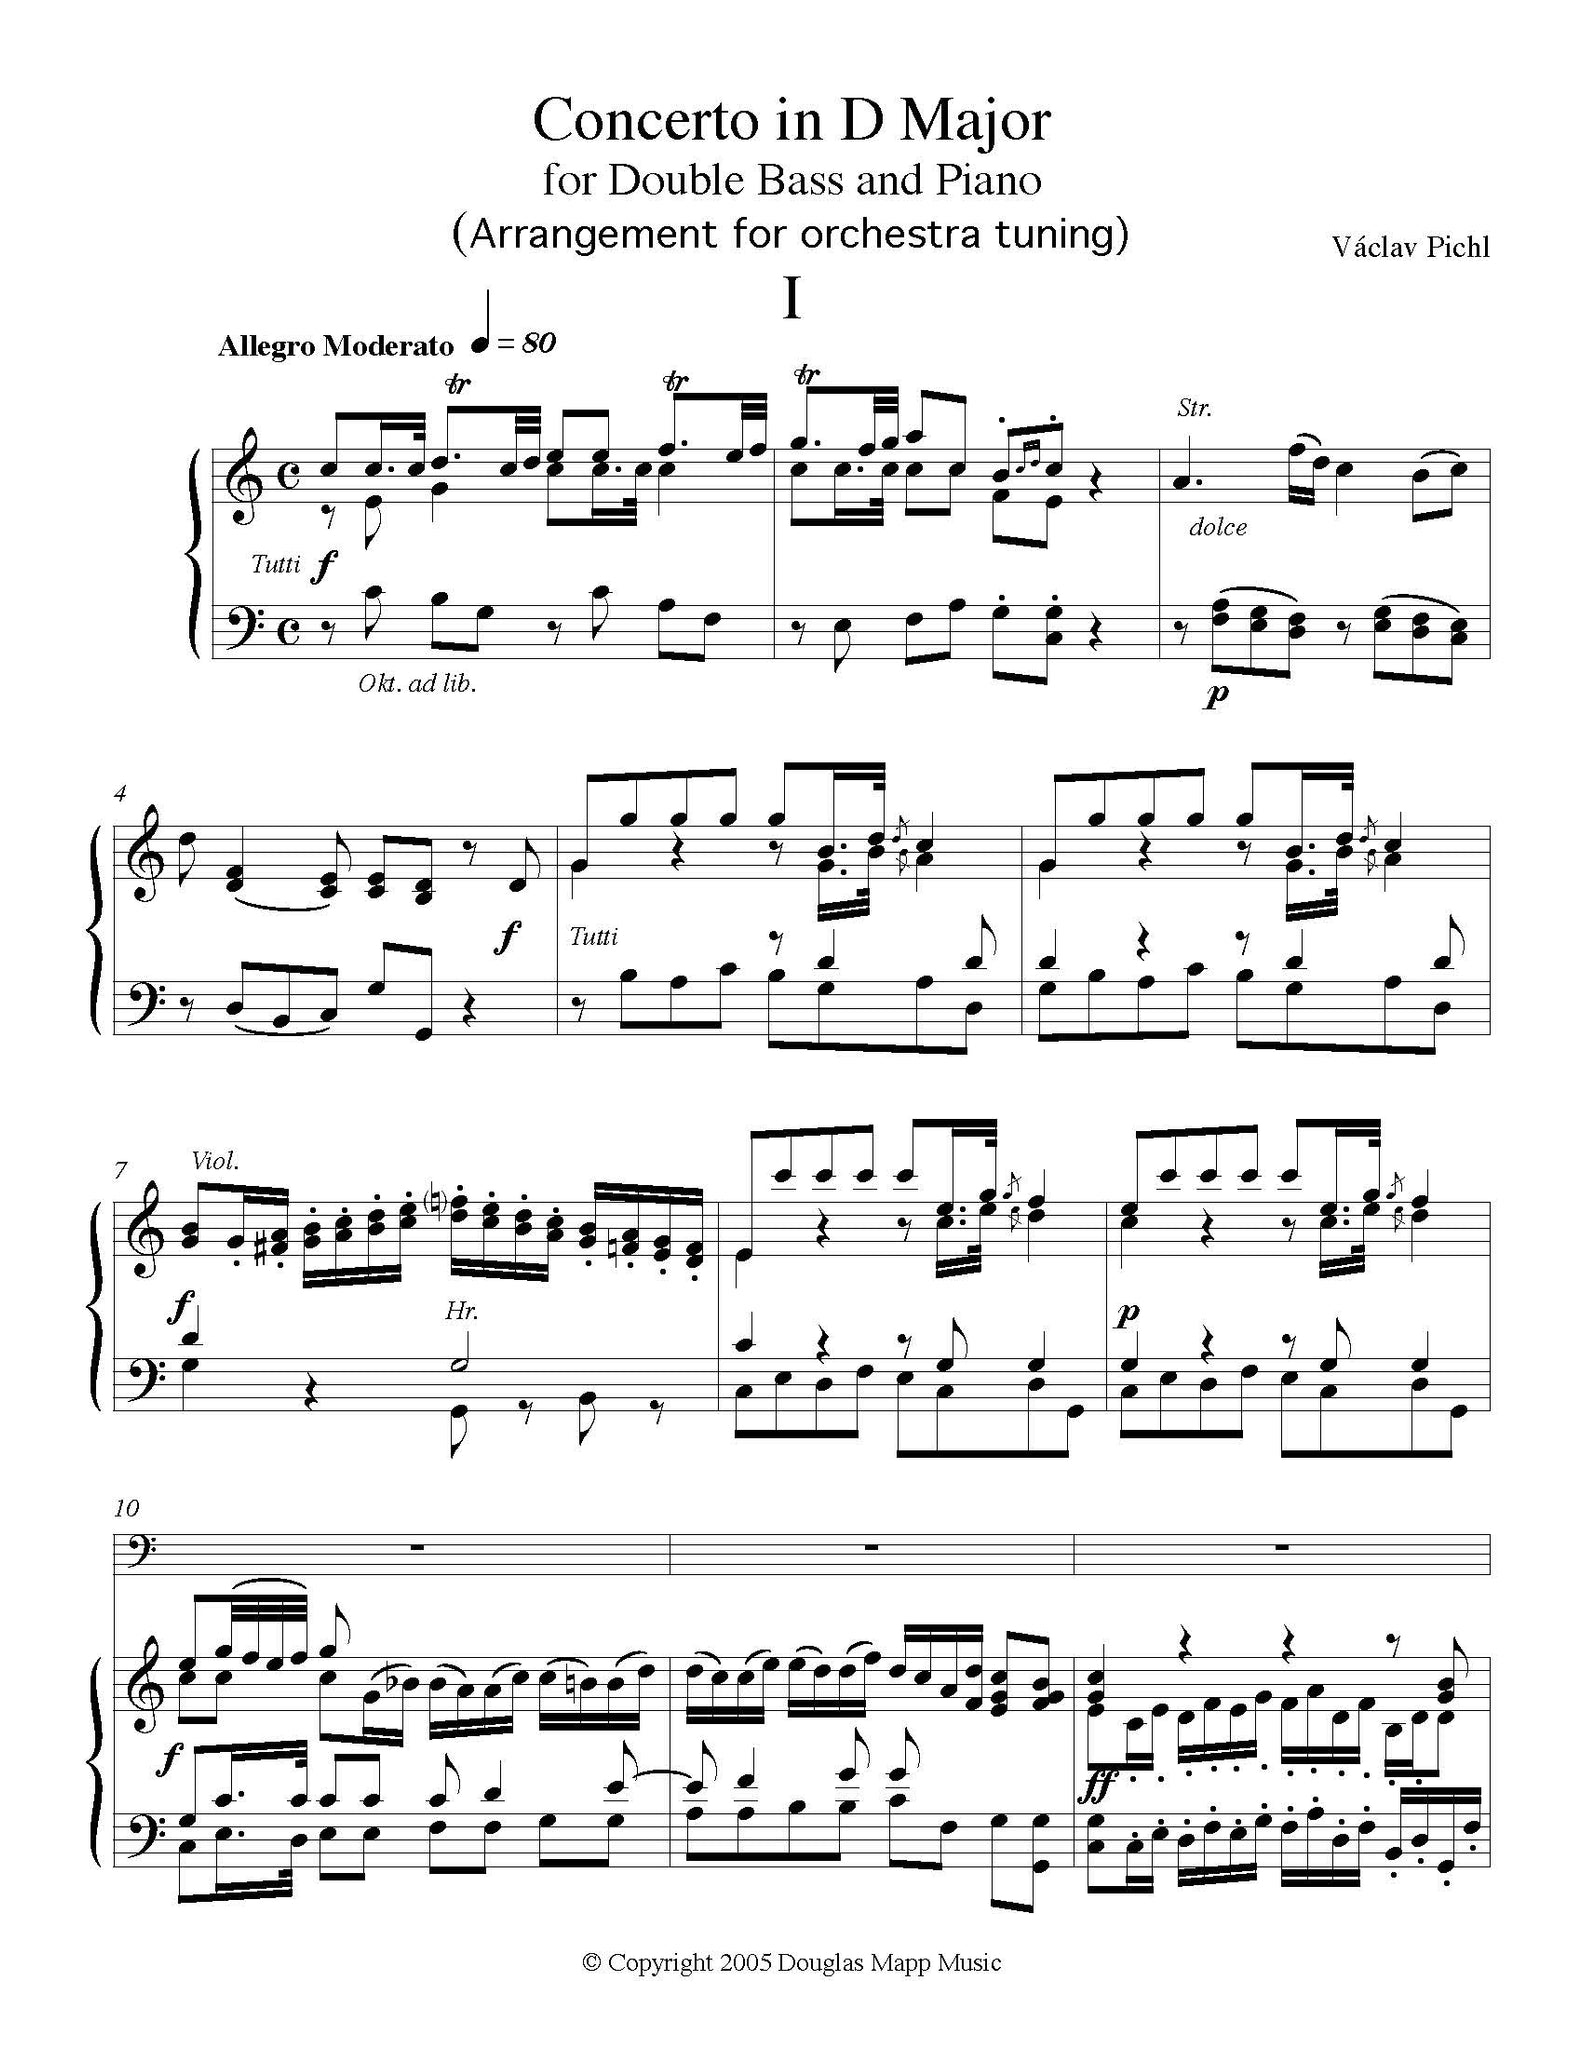 Pichl Concerto orchestra tuning page 1